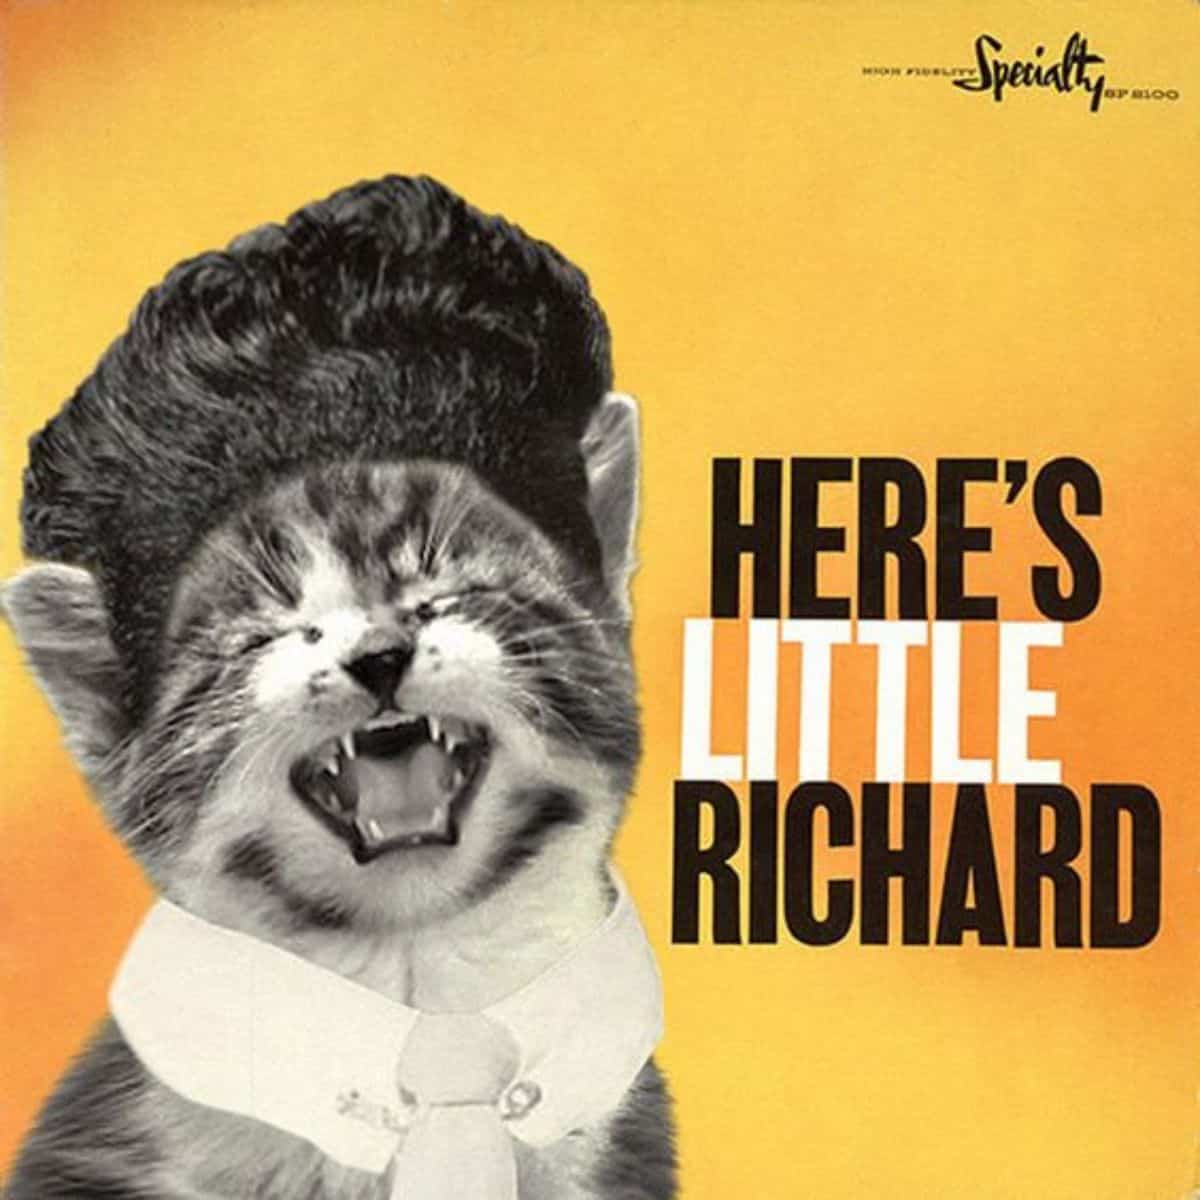 cat version of little richard's album